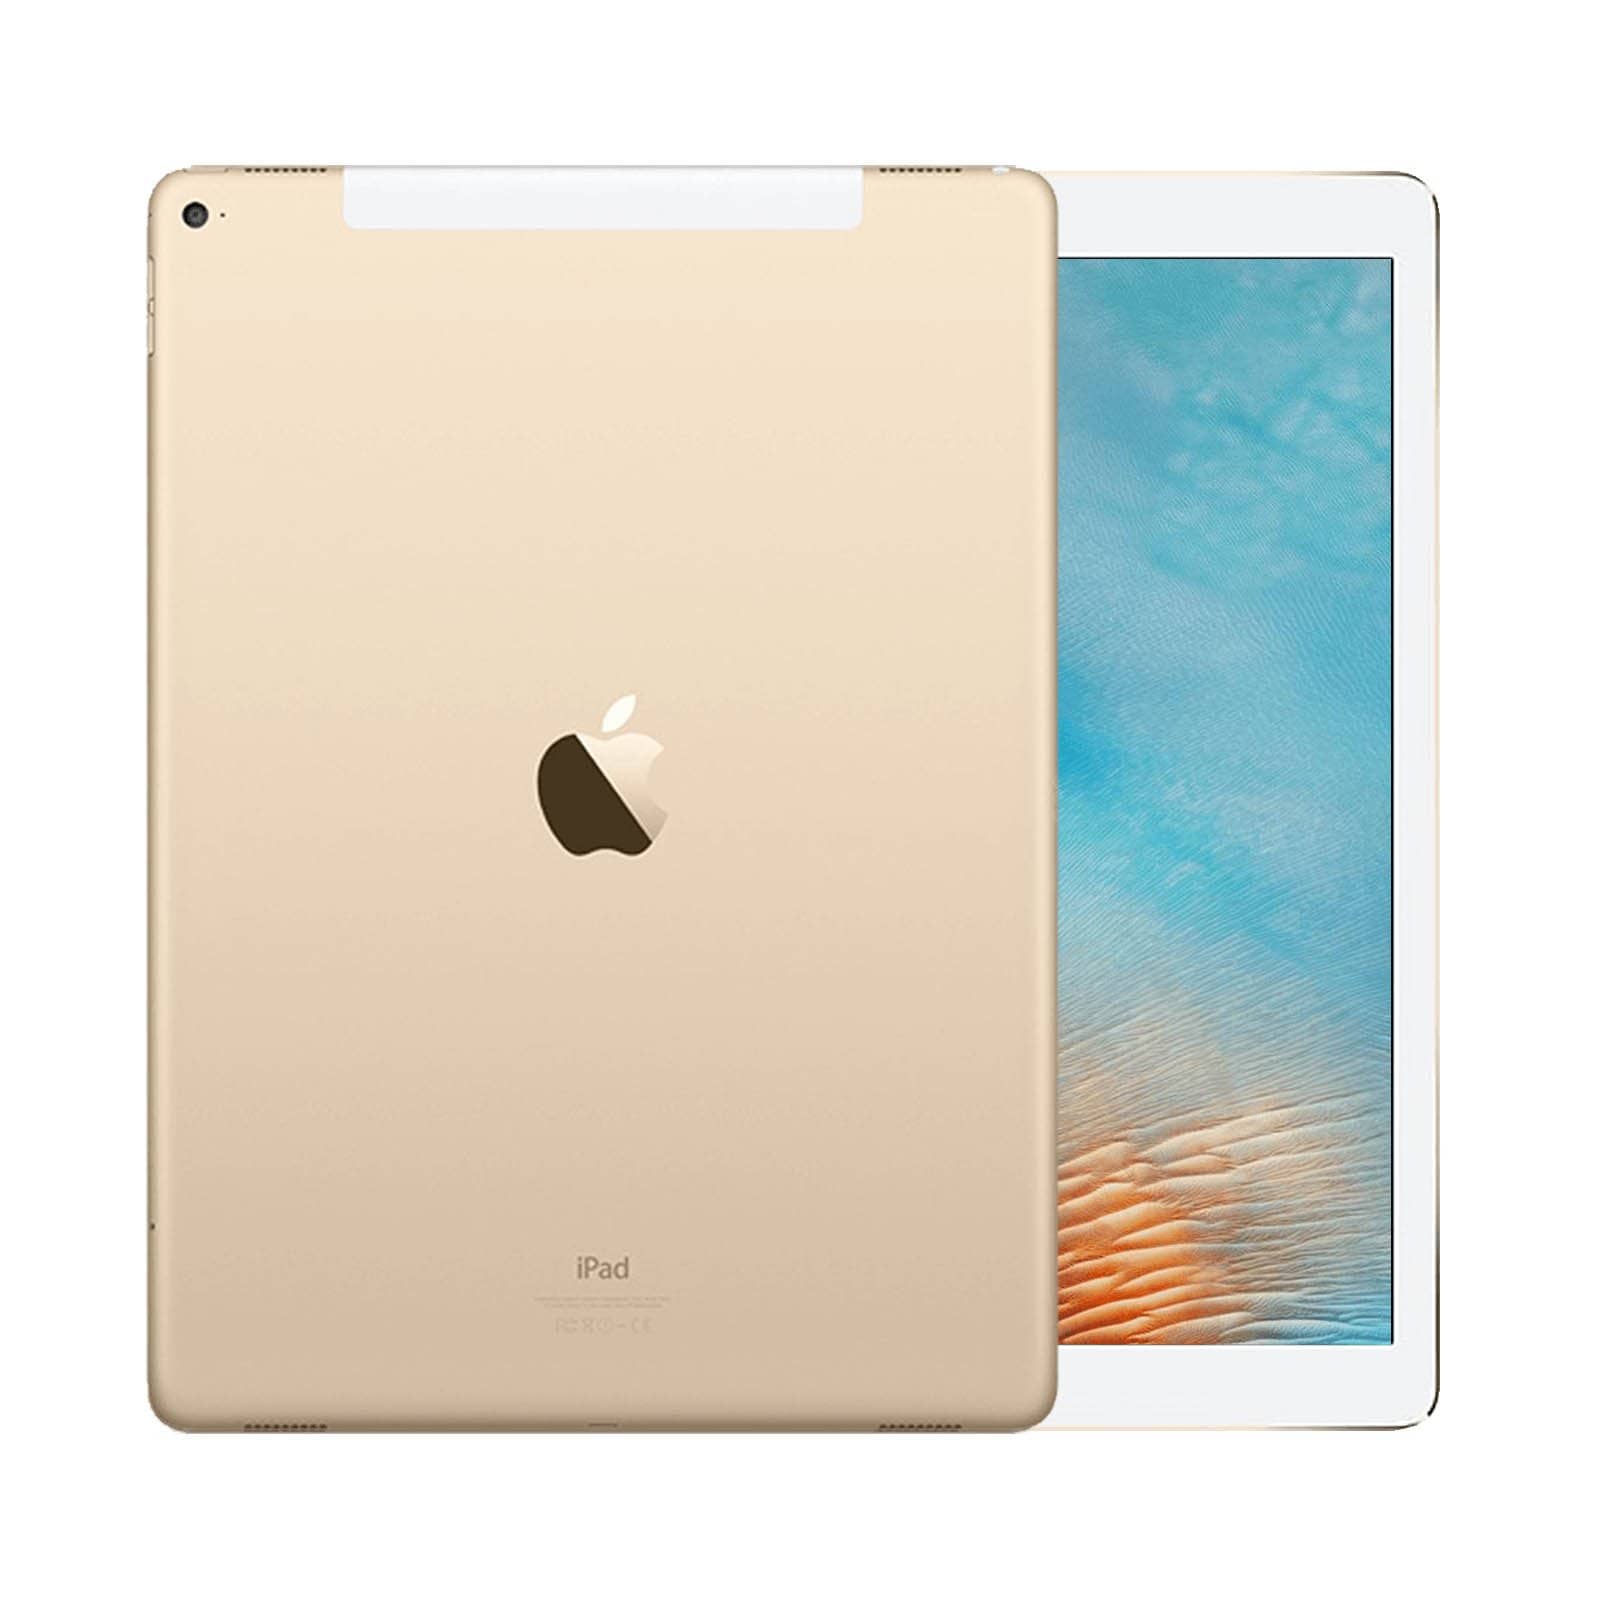 iPad Pro 12.9 Inch 2nd Gen 512GB Gold Very Good - Unlocked 512GB Gold Very Good